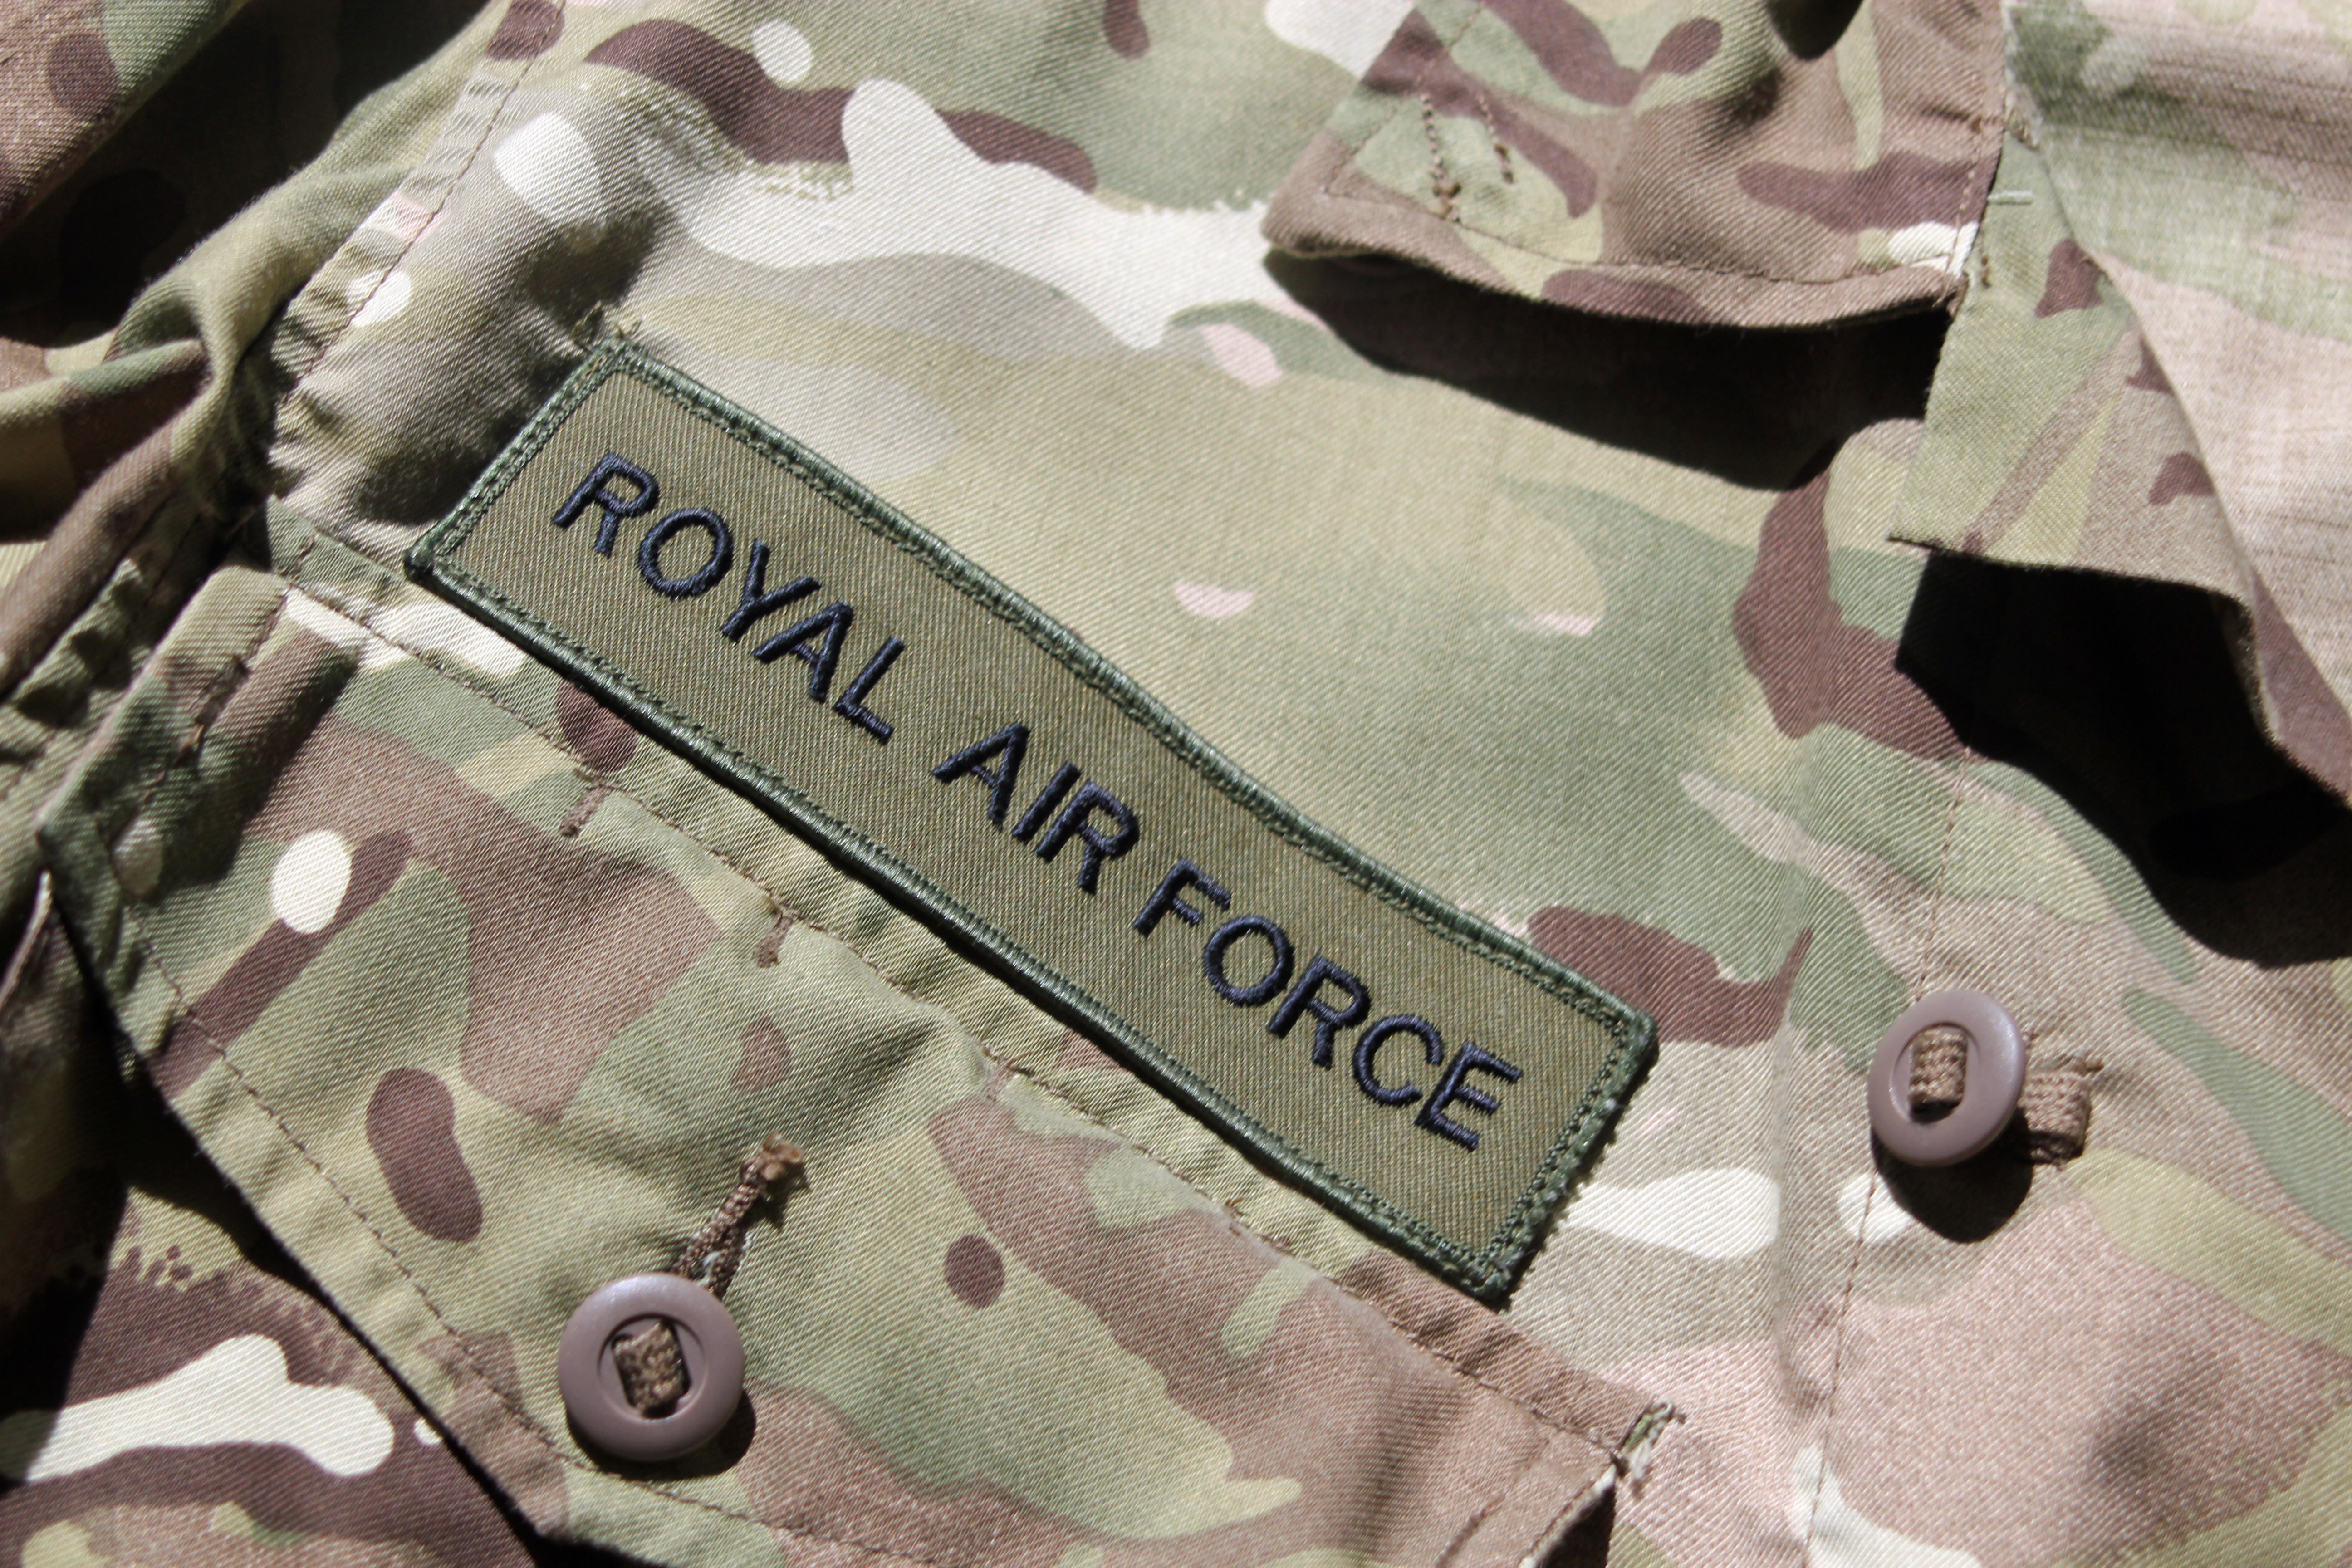 Background RAF military uniform